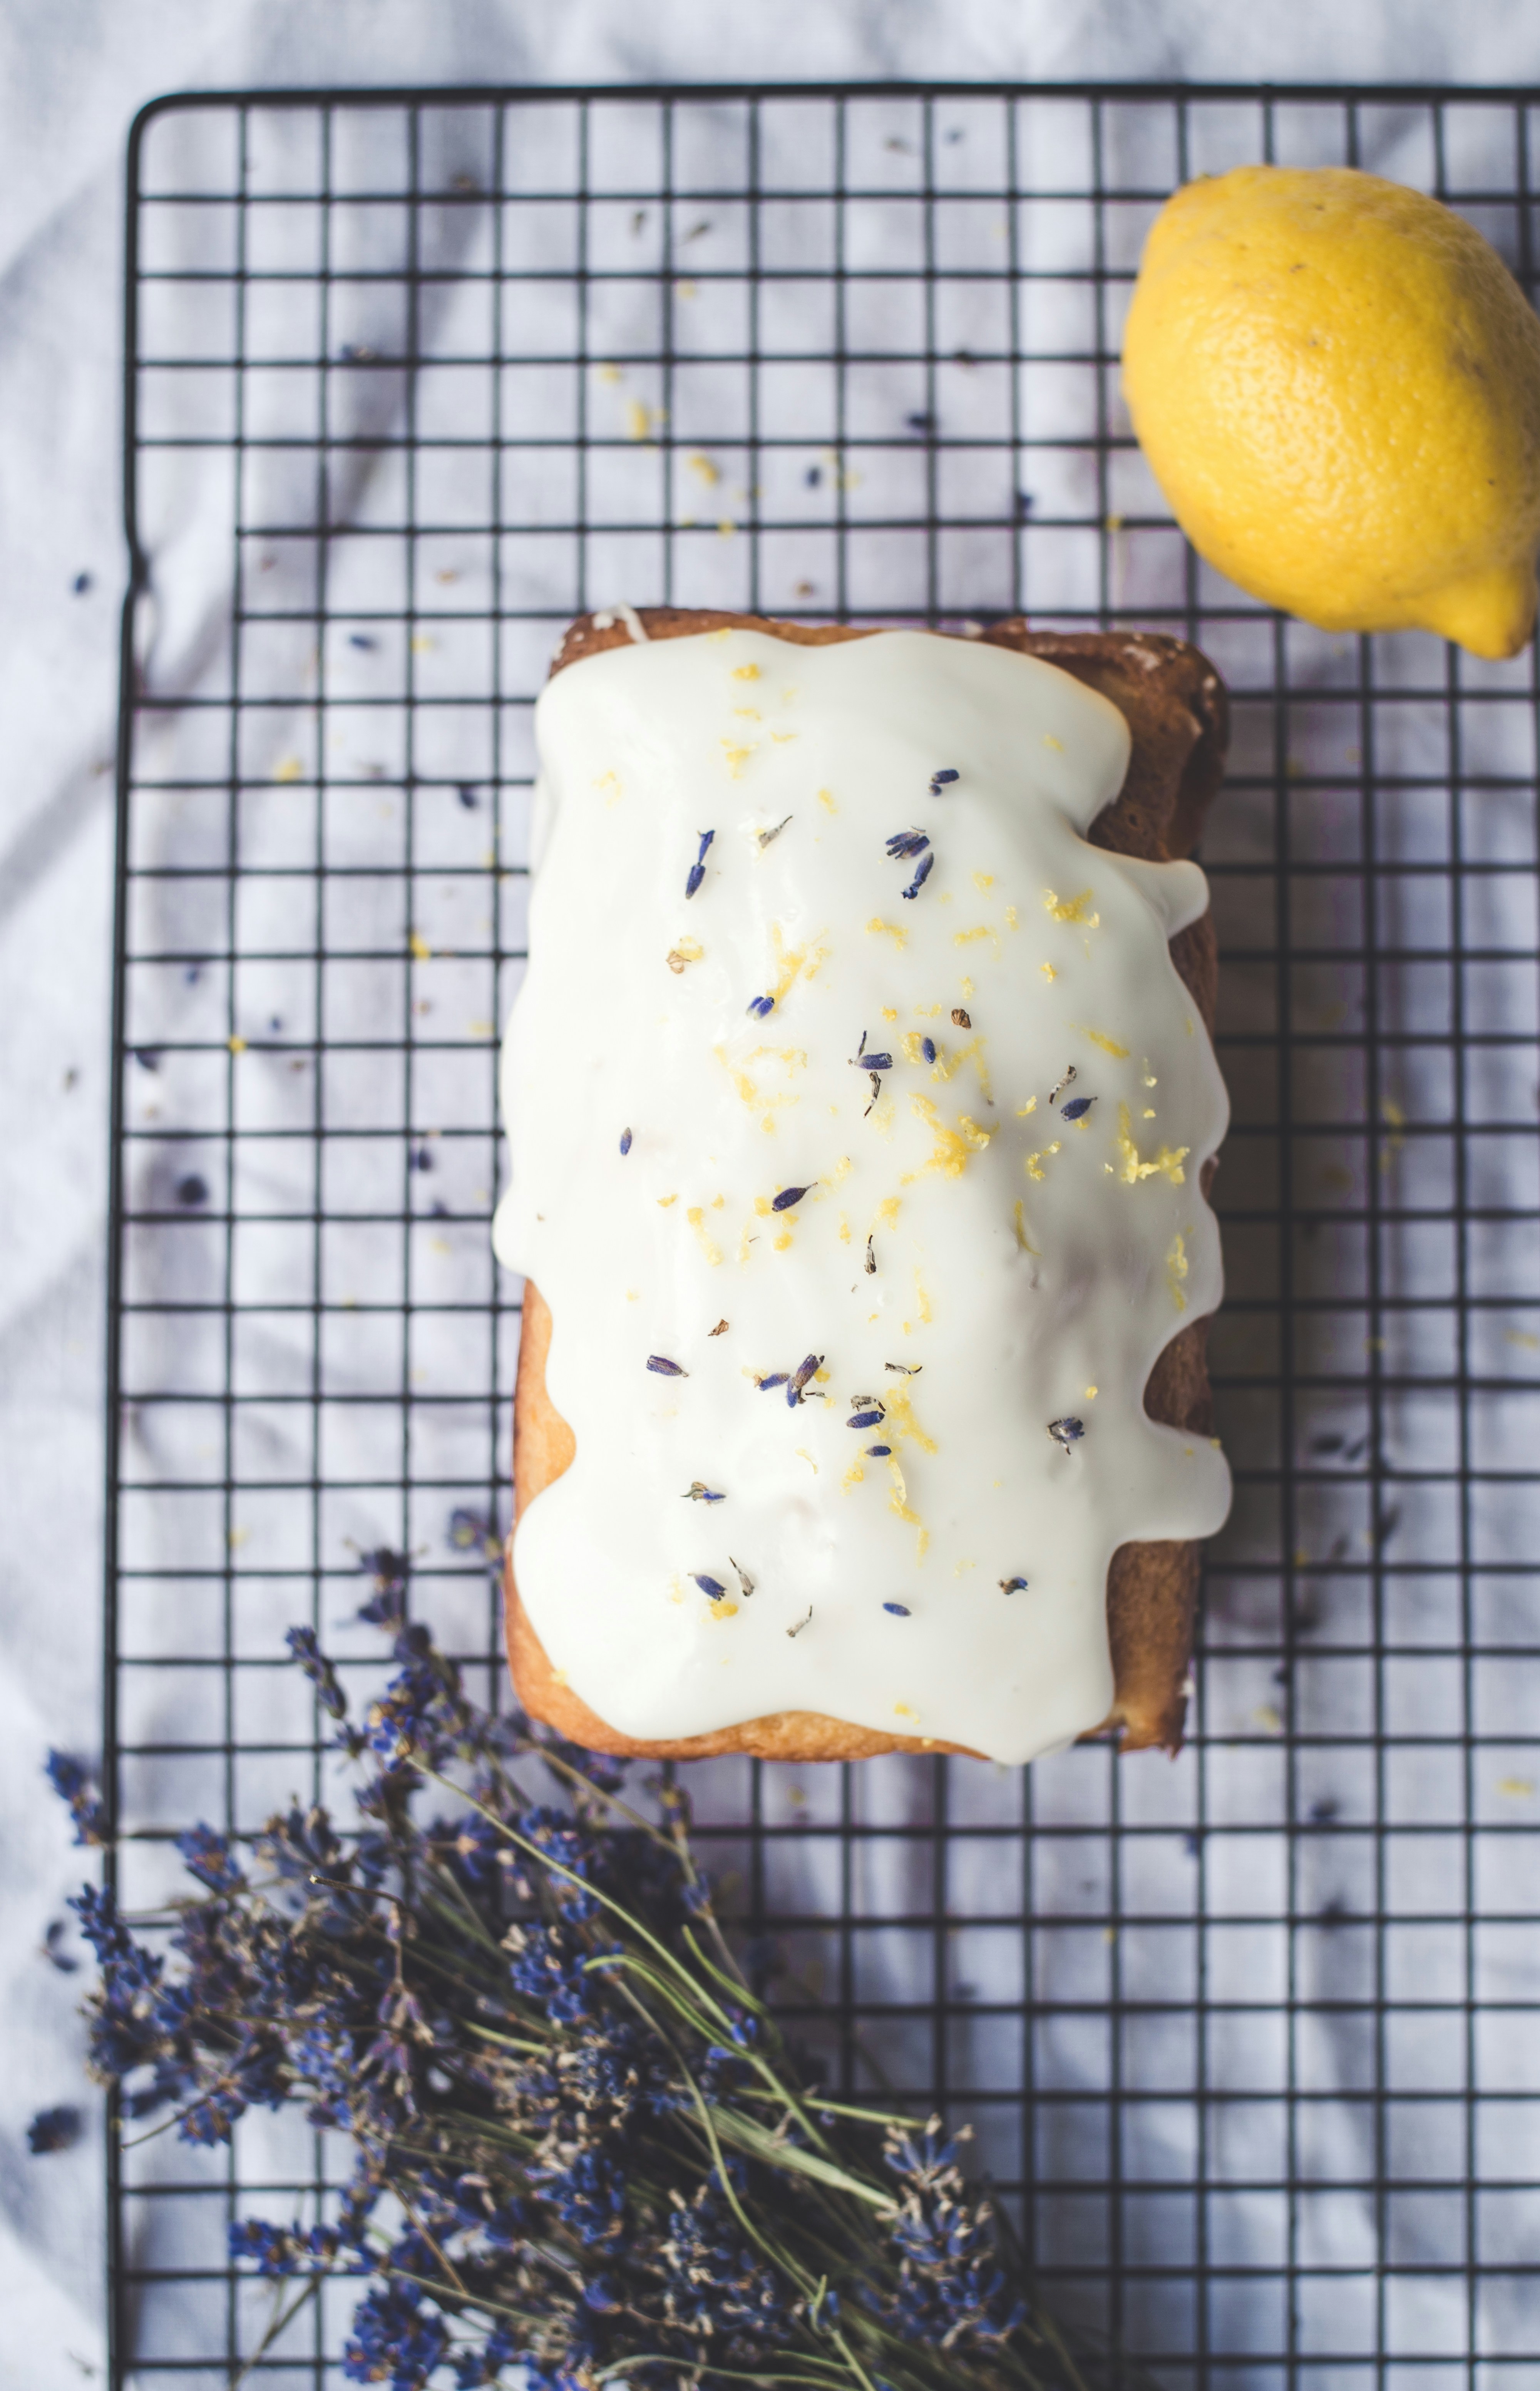 The recipe is on my blog if you fancy making it! https://mammasaurus.co.uk/journal/lavender-lemon-drizzle-cake-recipe